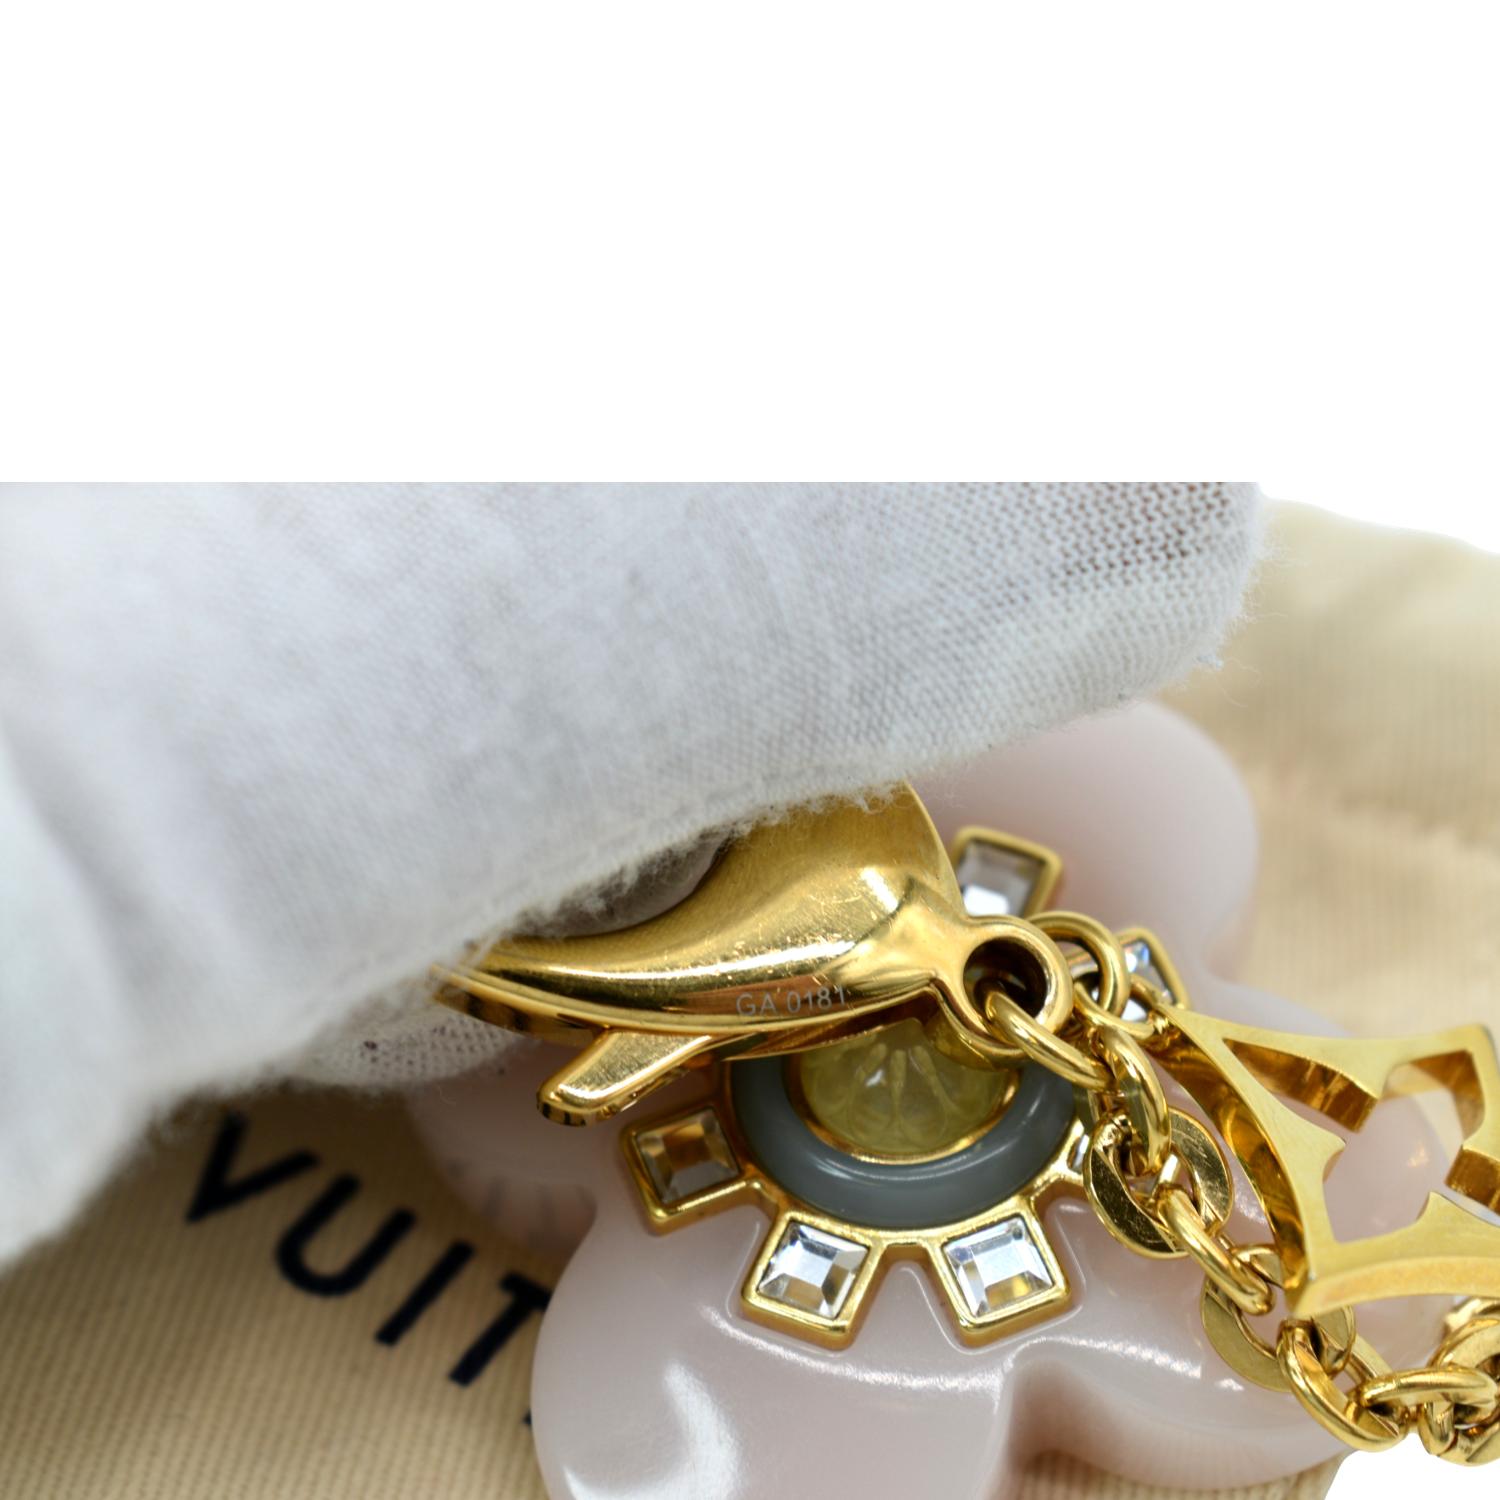 Louis Vuitton Love Birds Bag Charm Key Chain and Key Holder